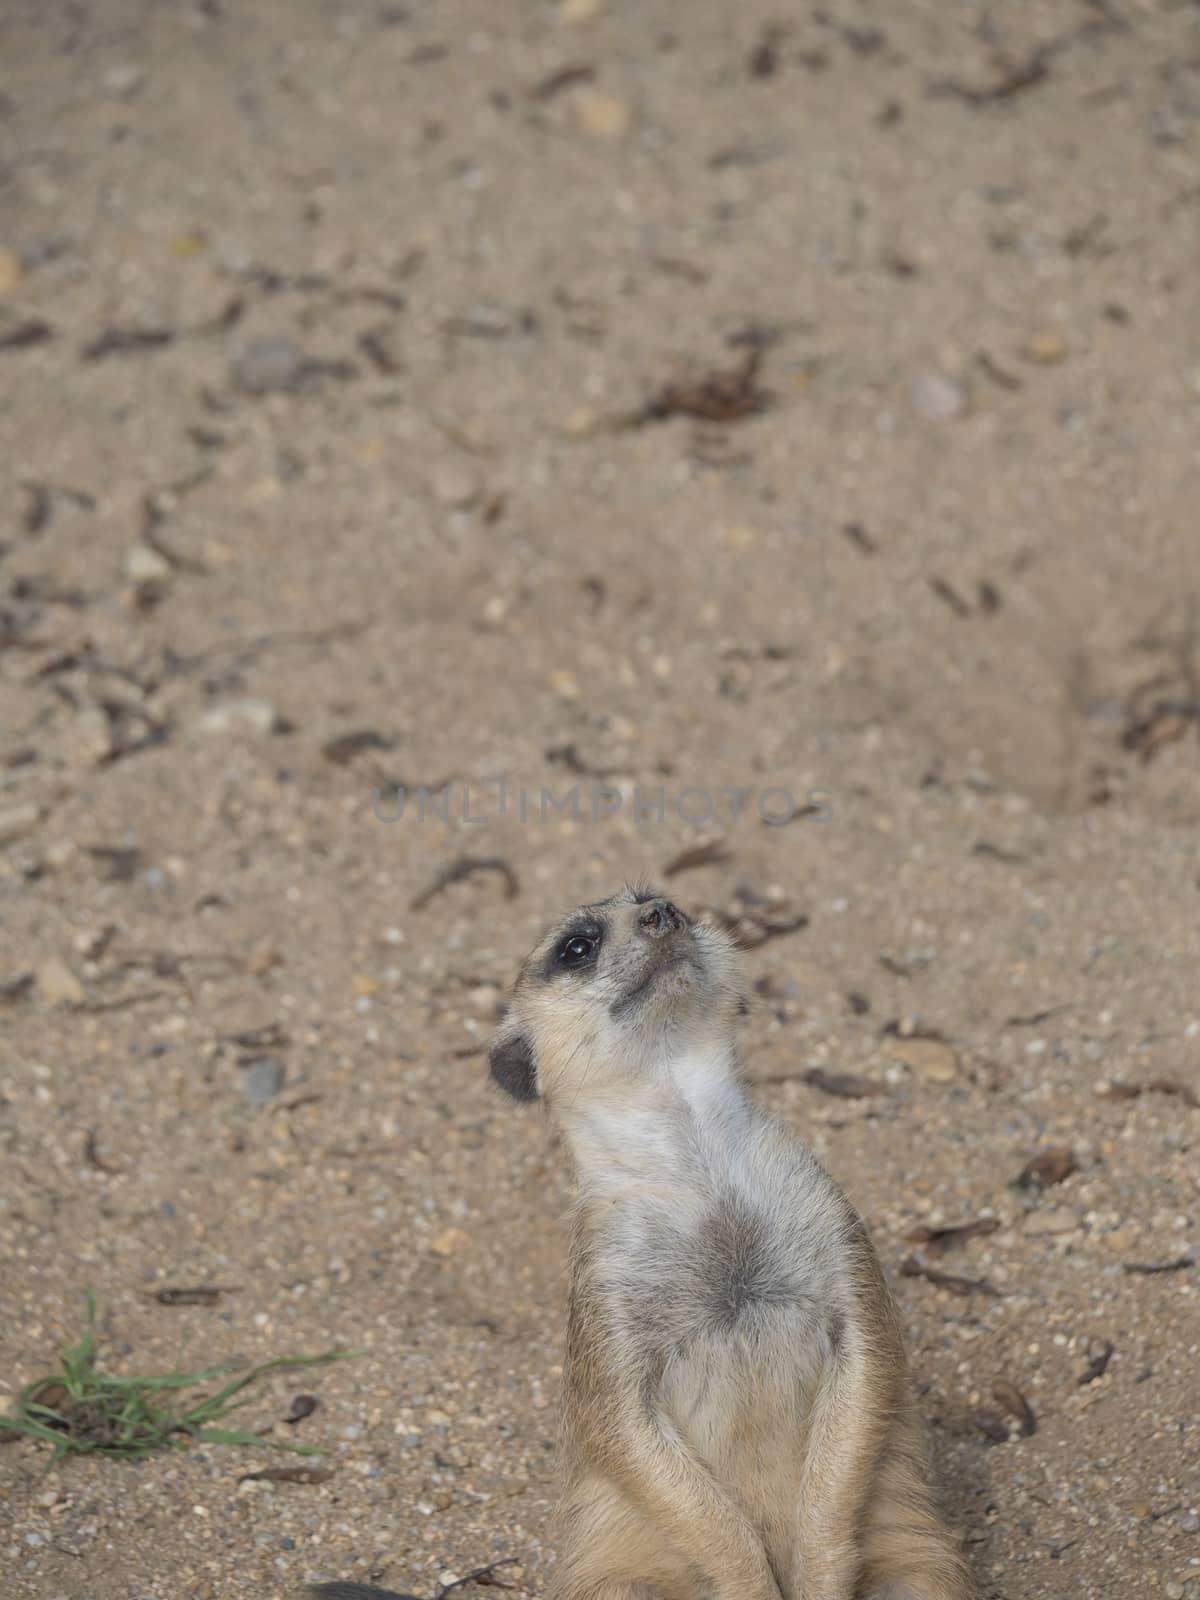 Close up standing meerkat or suricate, Suricata suricatta looking up, selective focus, copy space for text by Henkeova